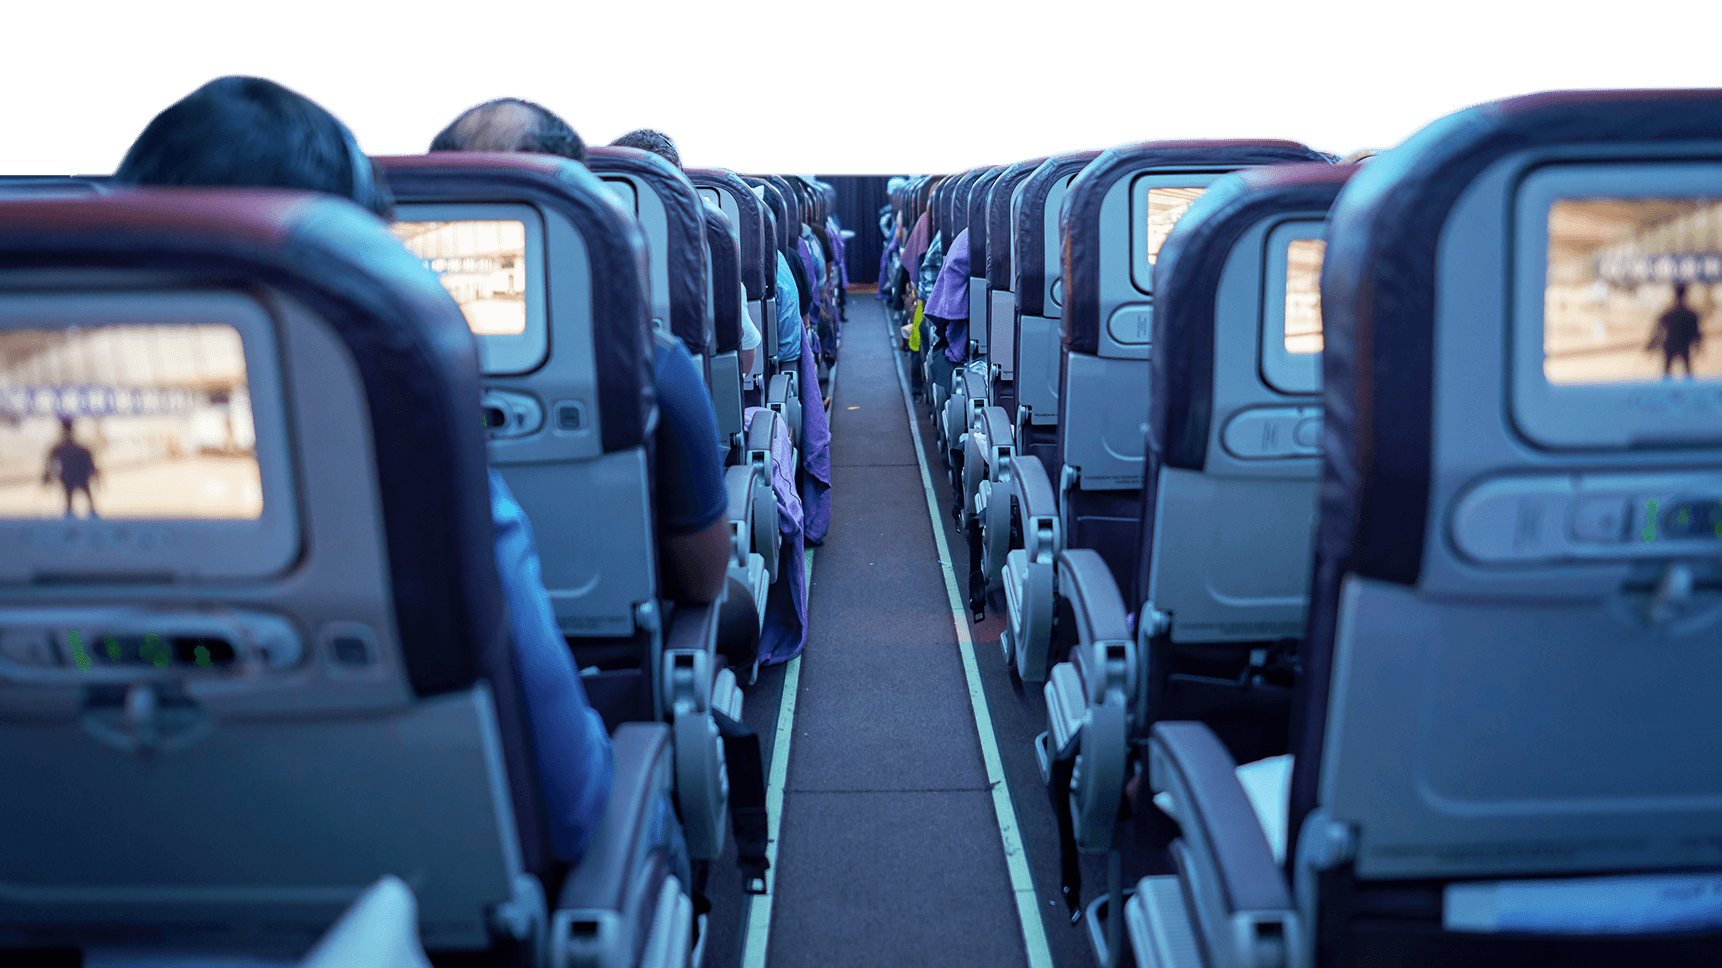 Can technology help enhance the passenger experience?